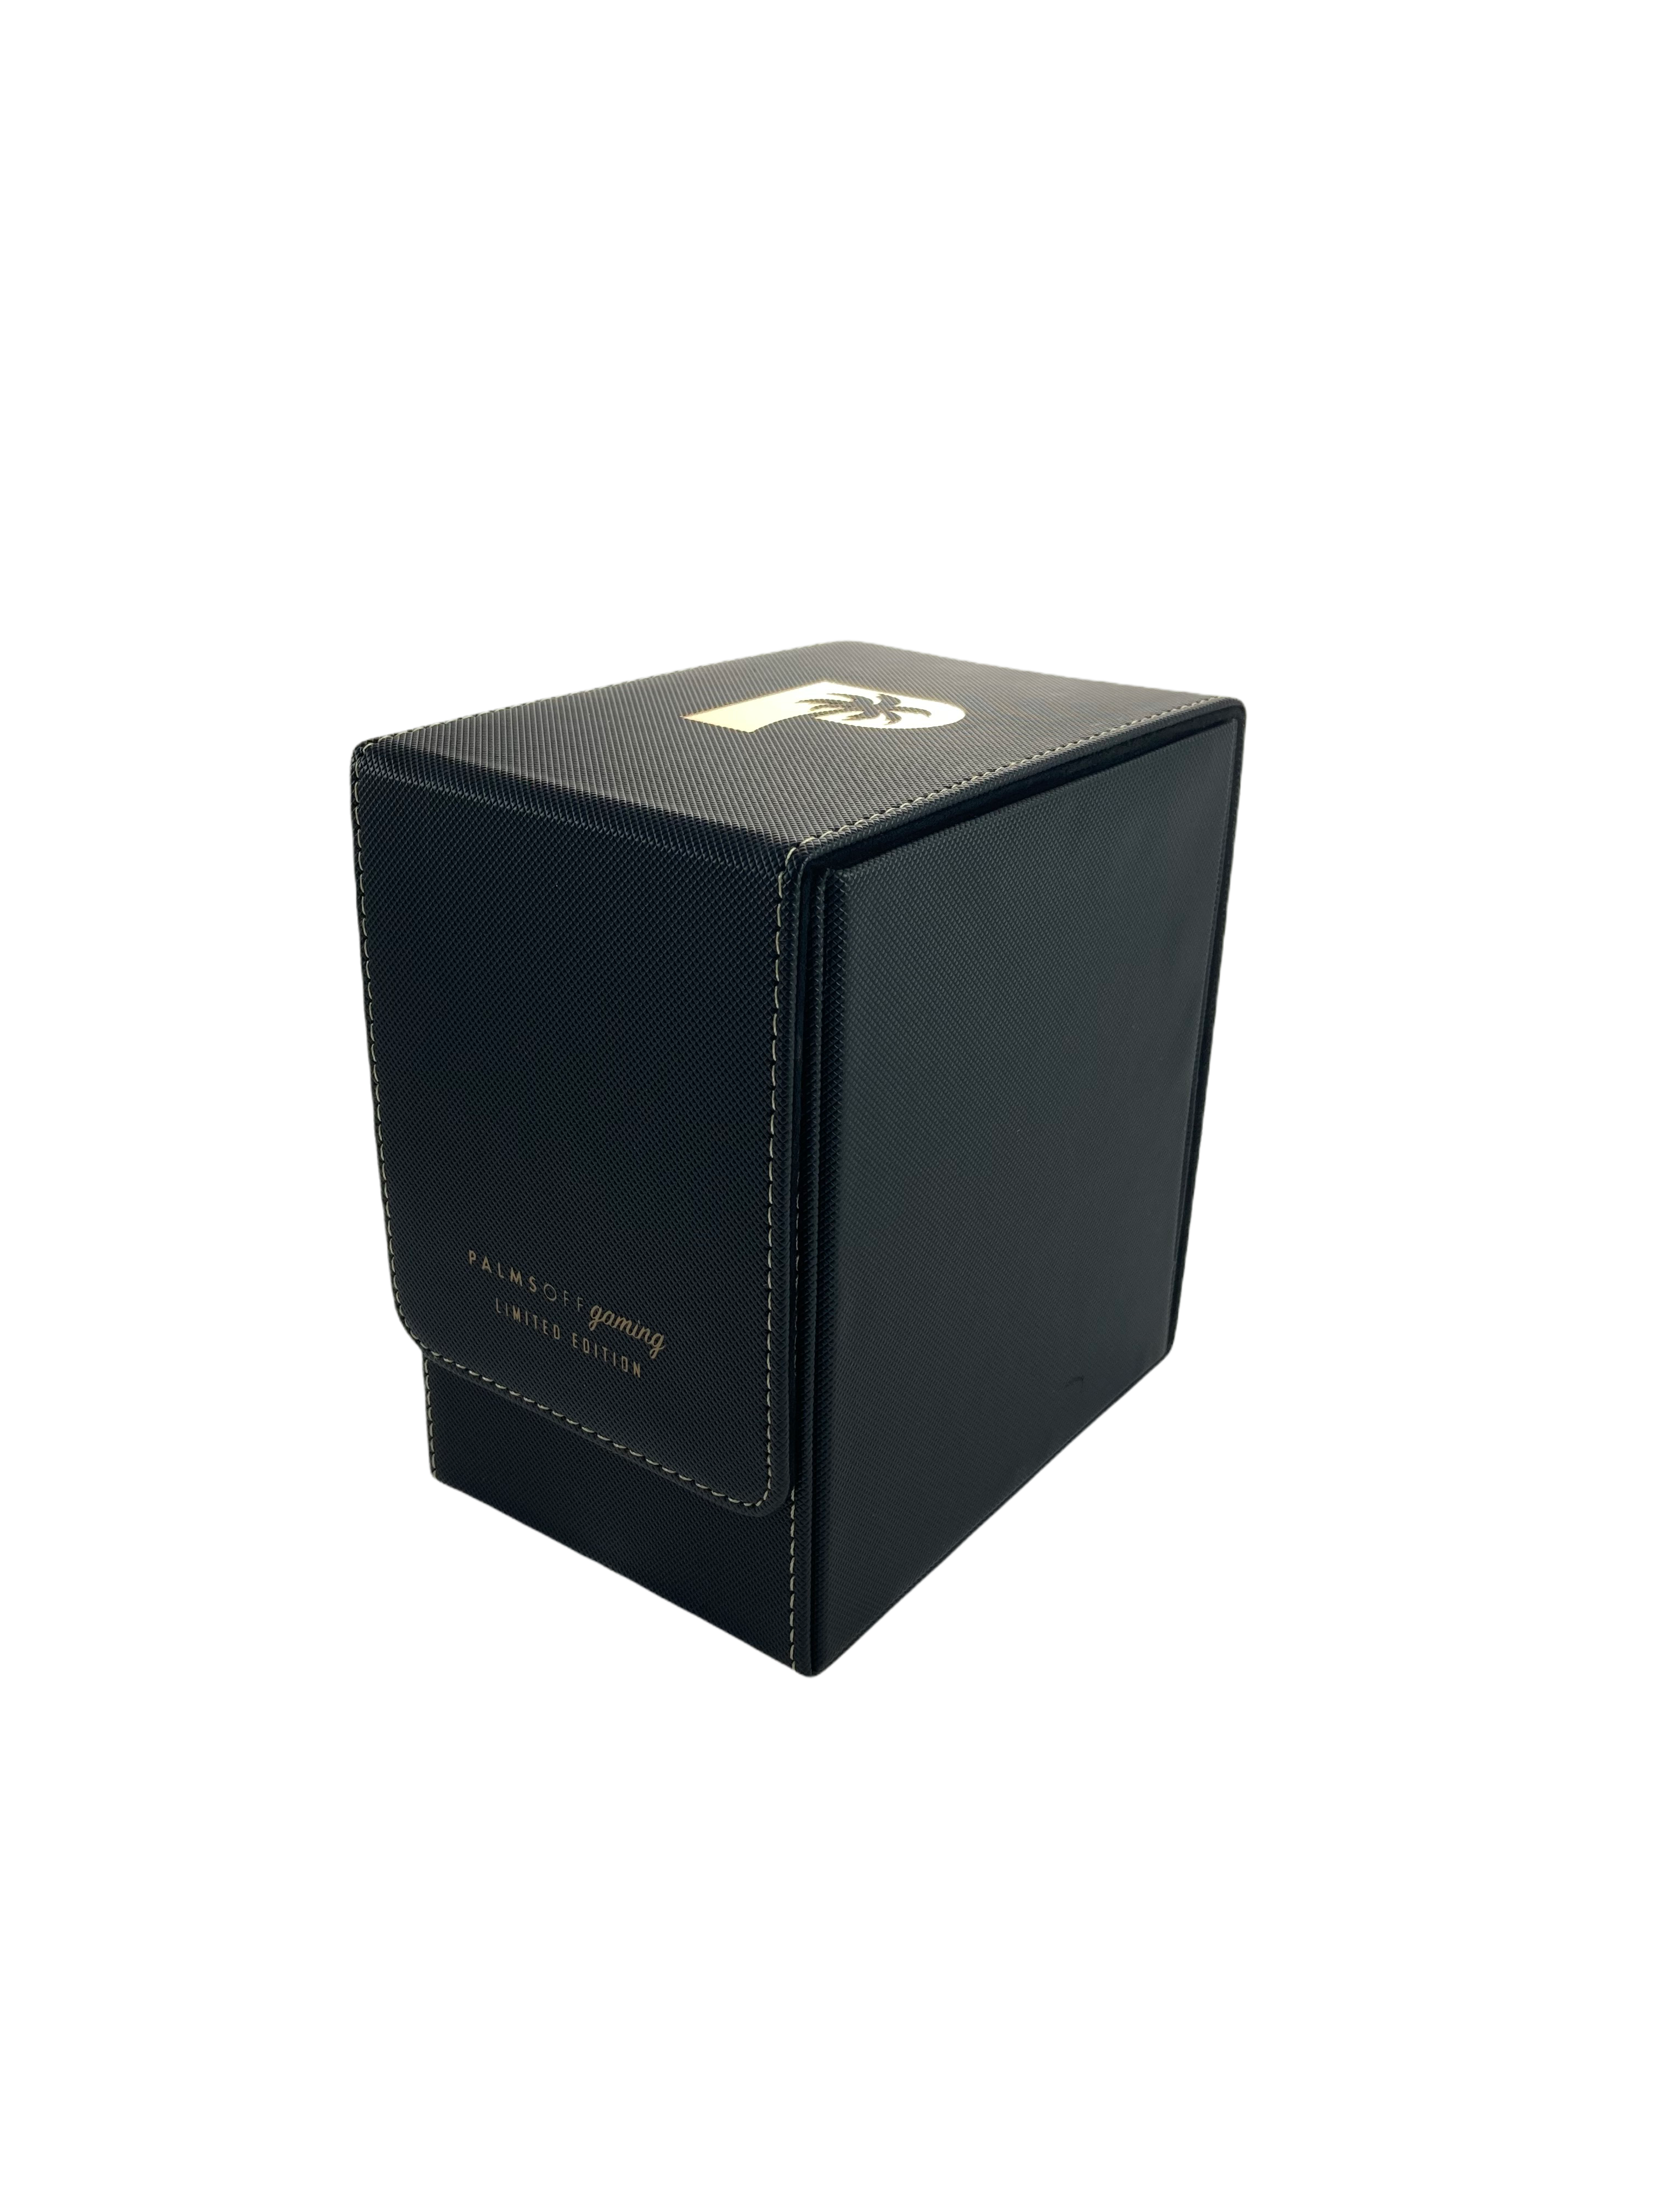 Collectors Series High-Class PSA Storage Case (Single Row) (Black Card X Exclusive)